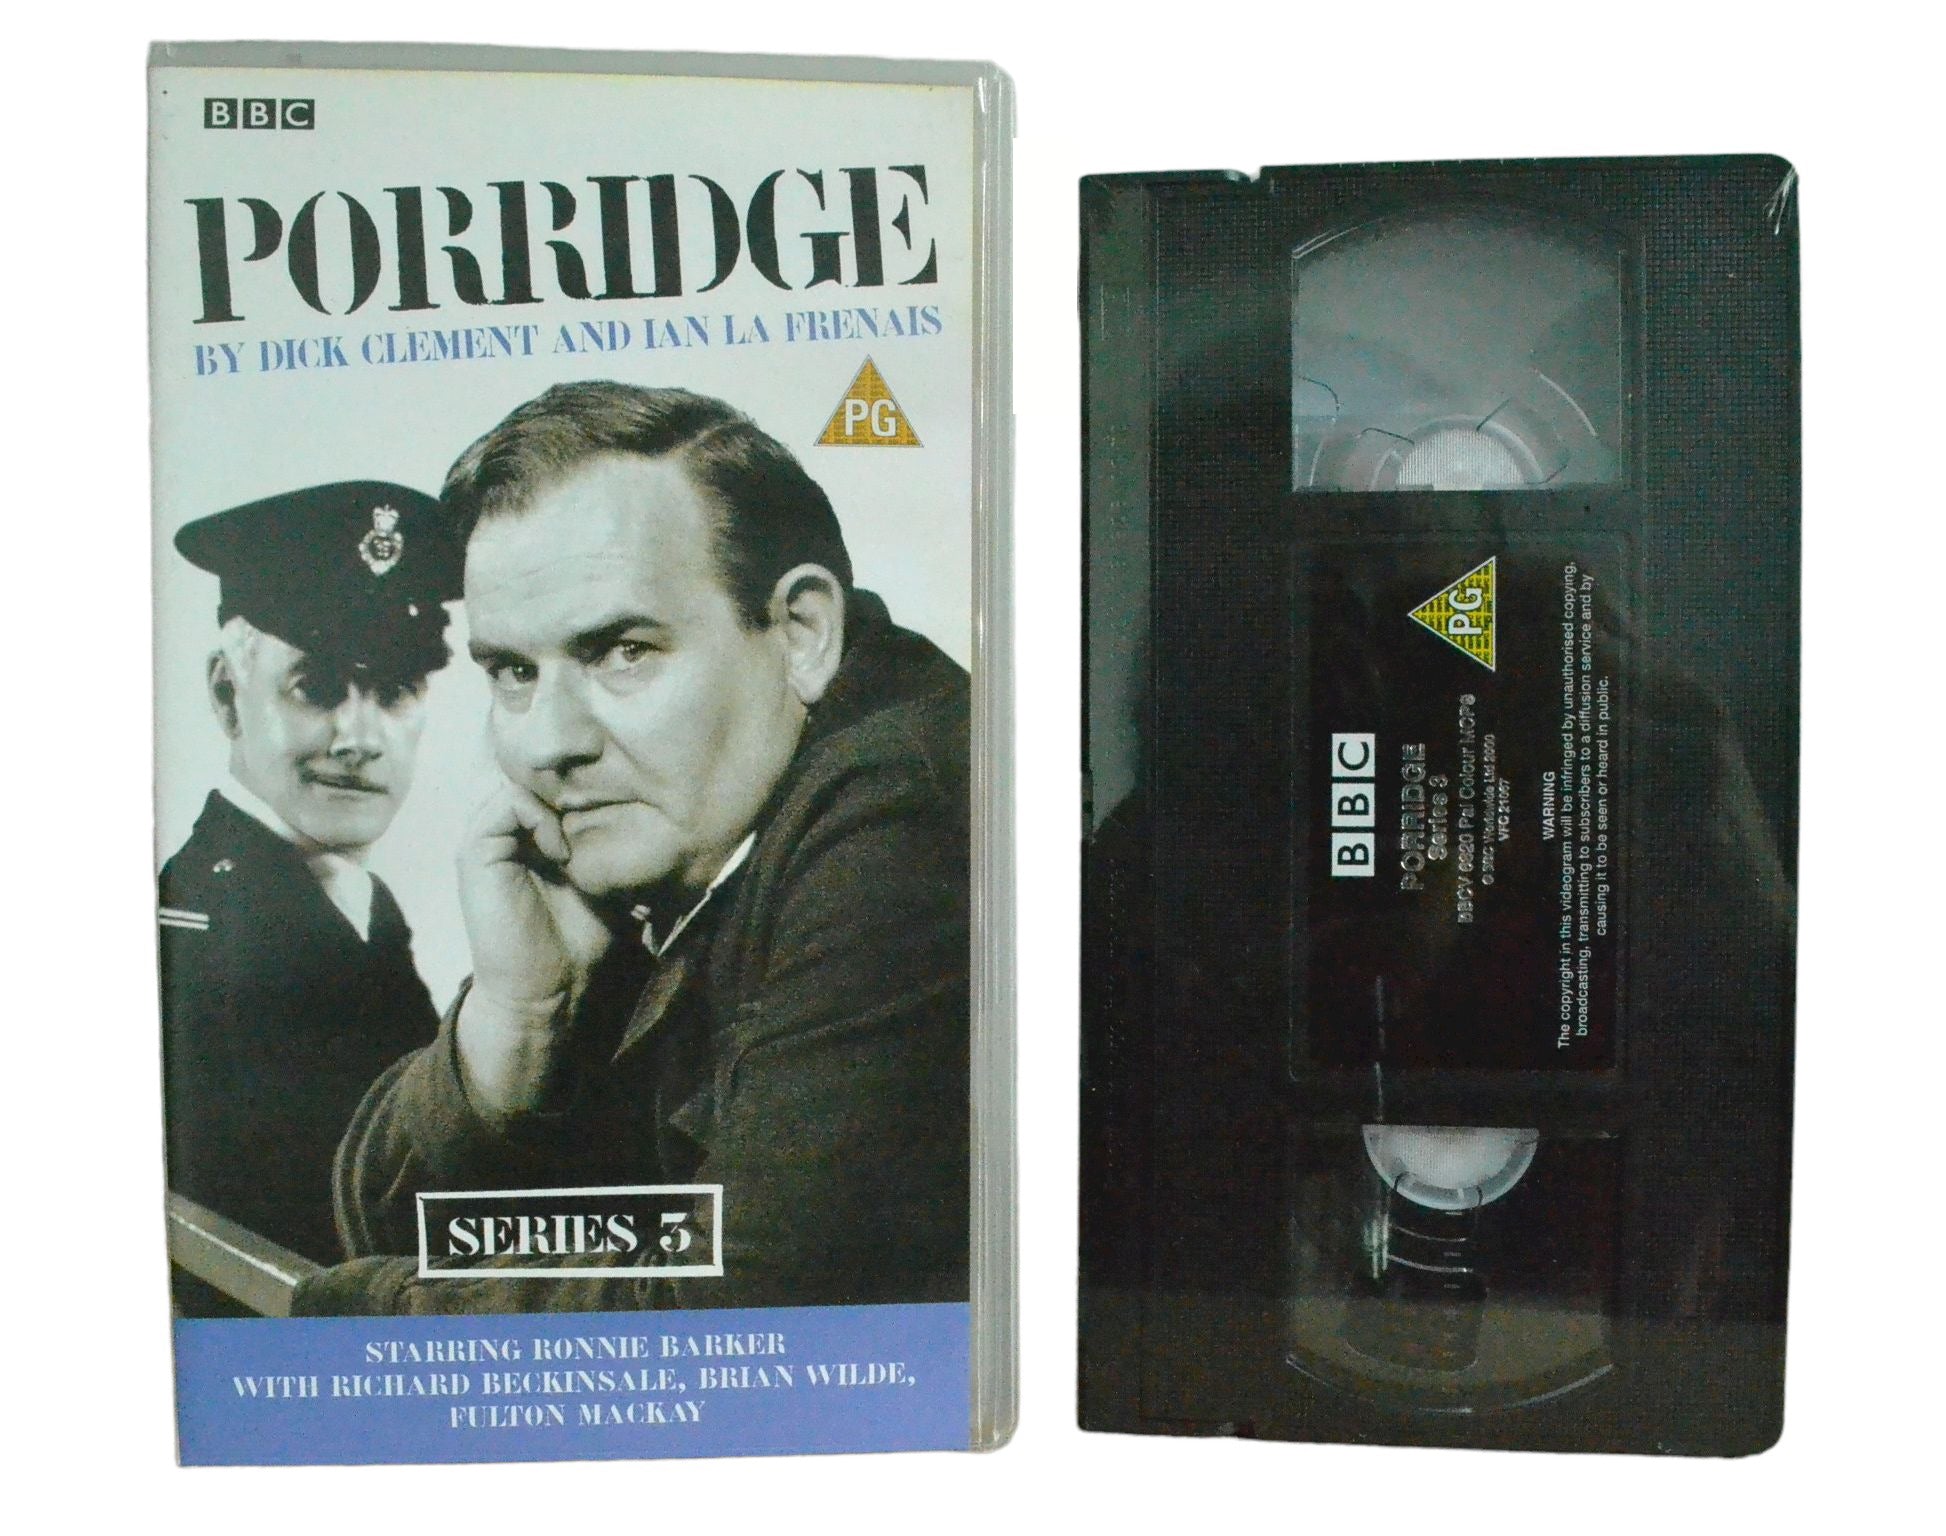 Porridge (Series-3) - Ronnie Barker - BBC Video - Brand New Sealed - Pal VHS-